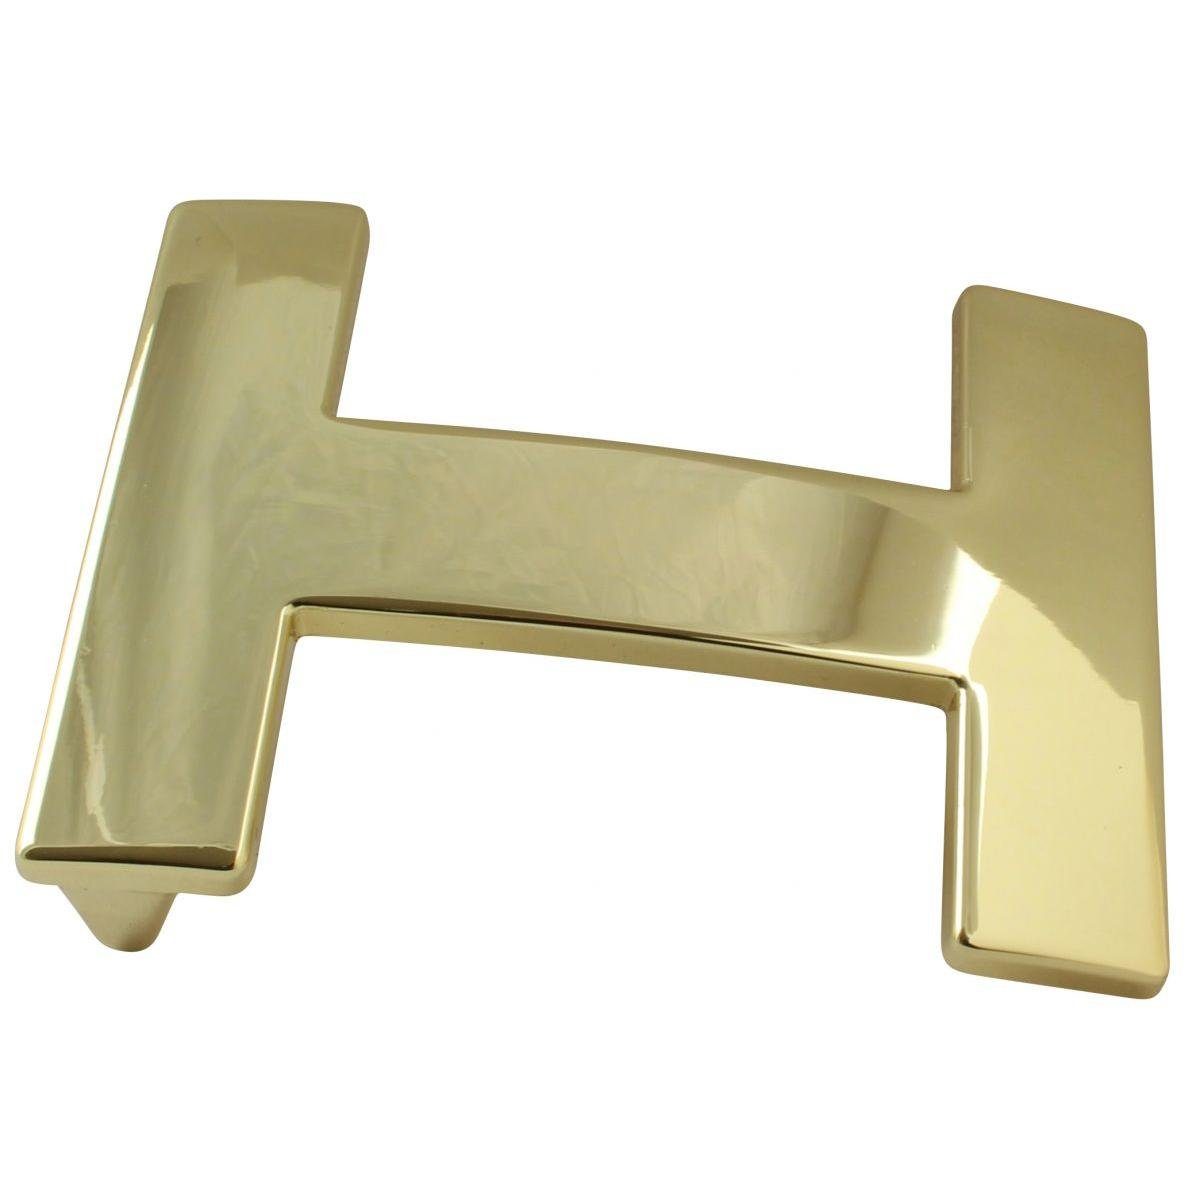 BELTINGER Gürtelschnalle Glänzend - 3cm 30mm Hestia Gold 3,0 cm - bis Wechselschließe Gürtelschließe Gürtel